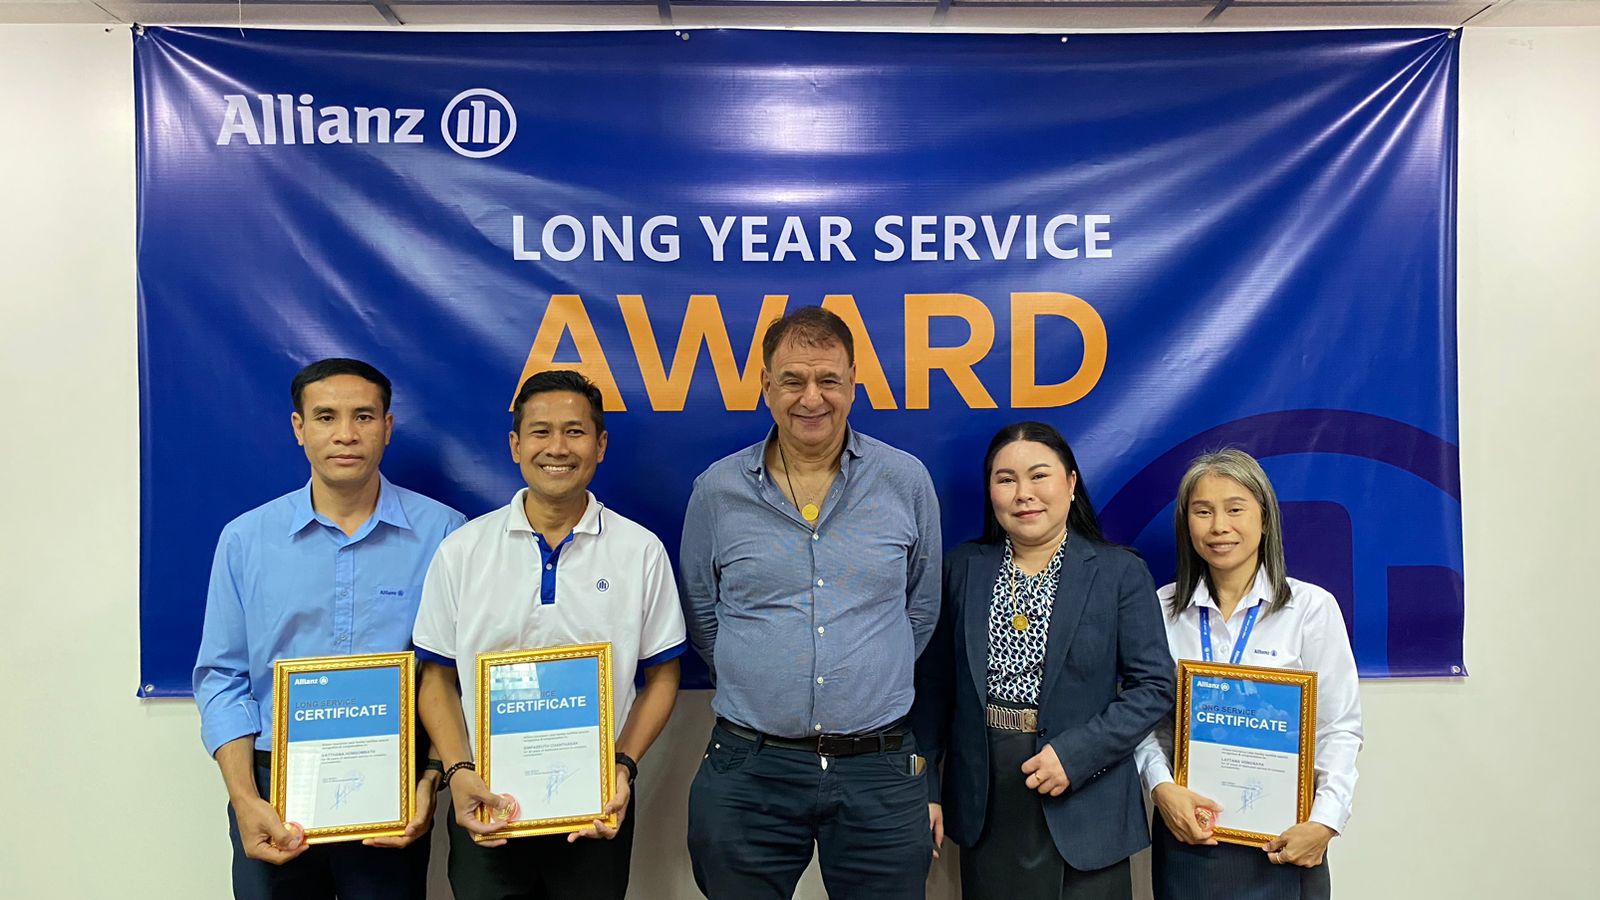 Long-Term Service Award at Allianz Laos